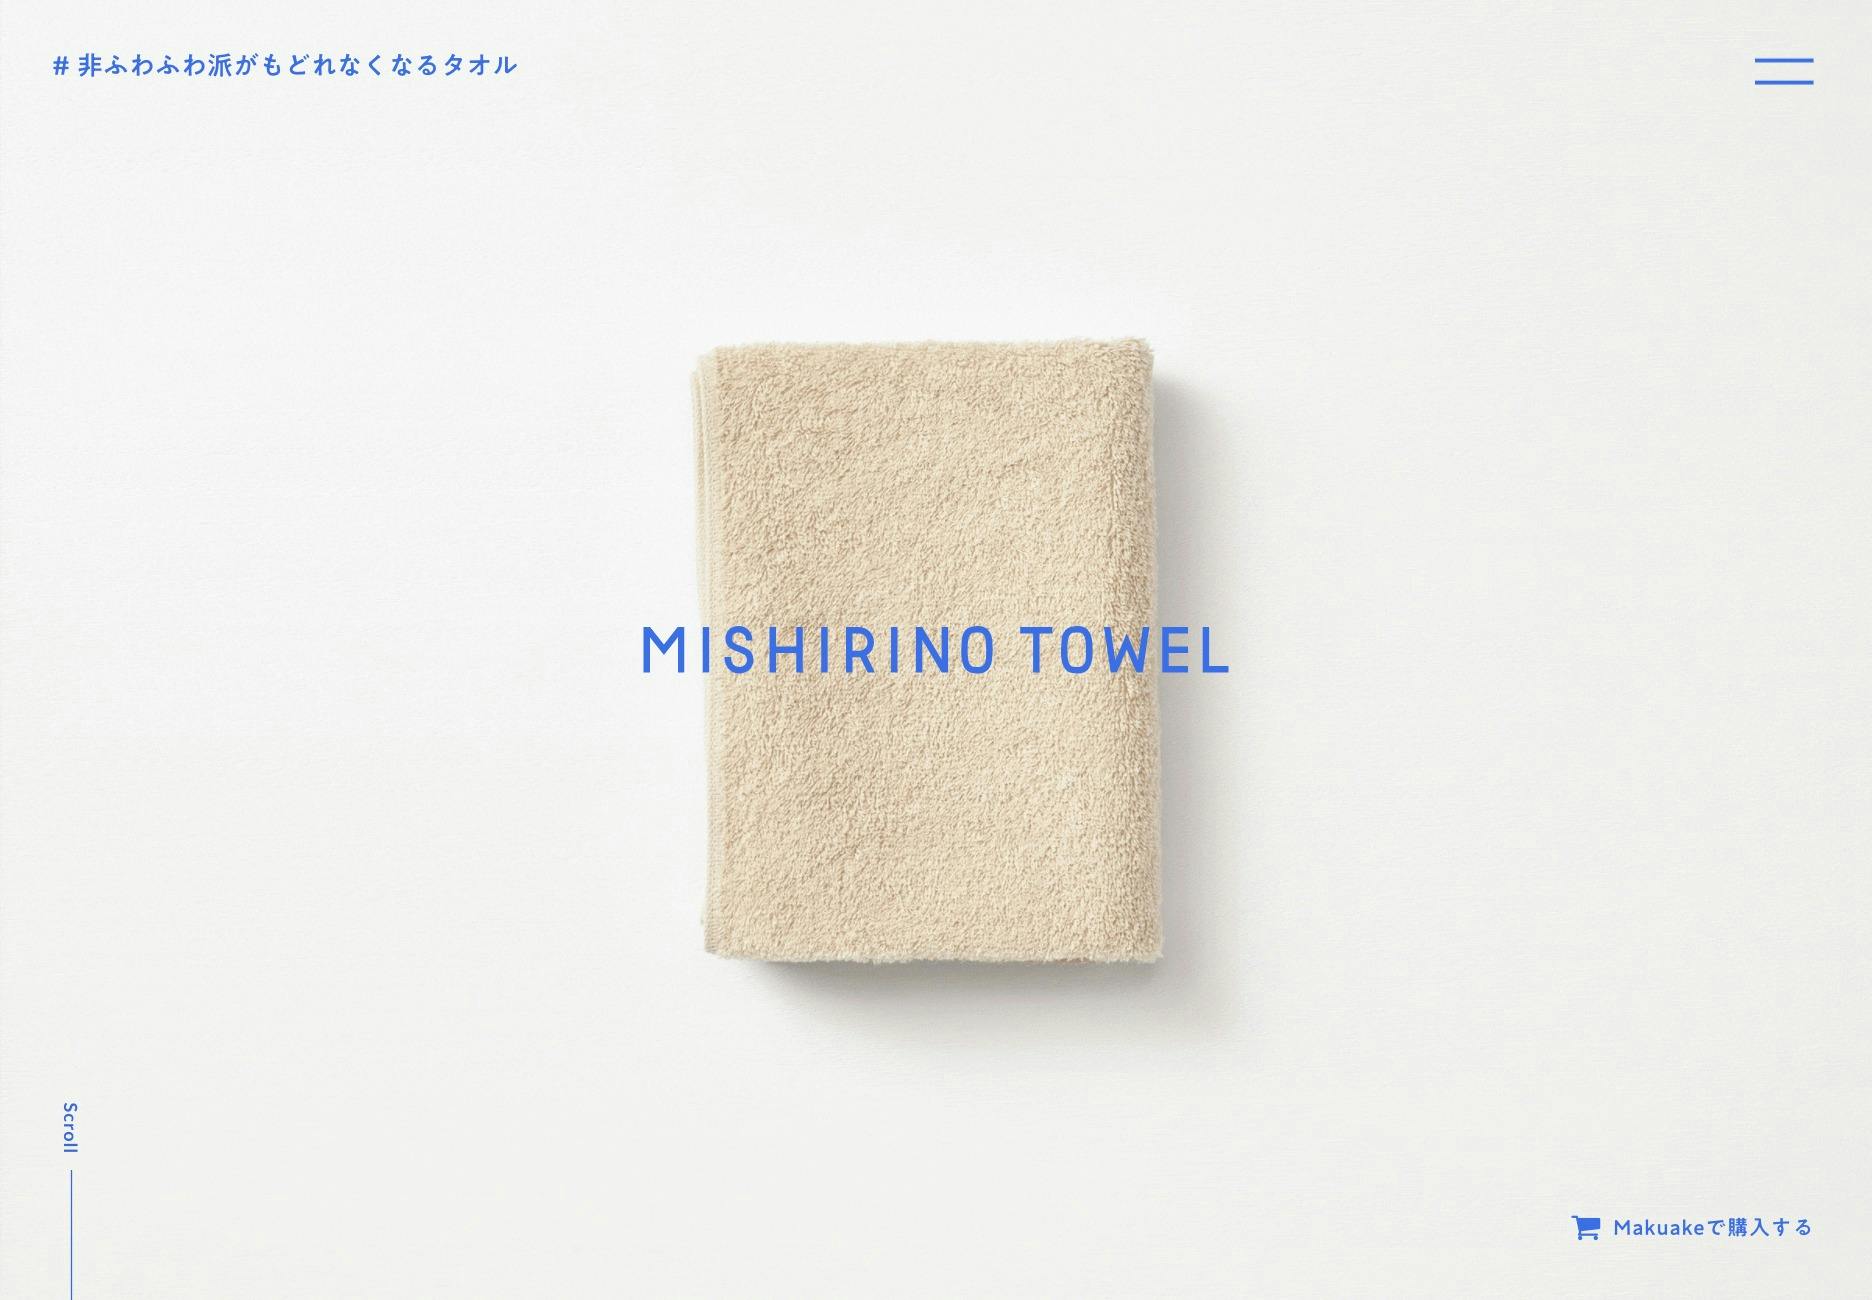 Cover Image for MISHIRINO TOWEL